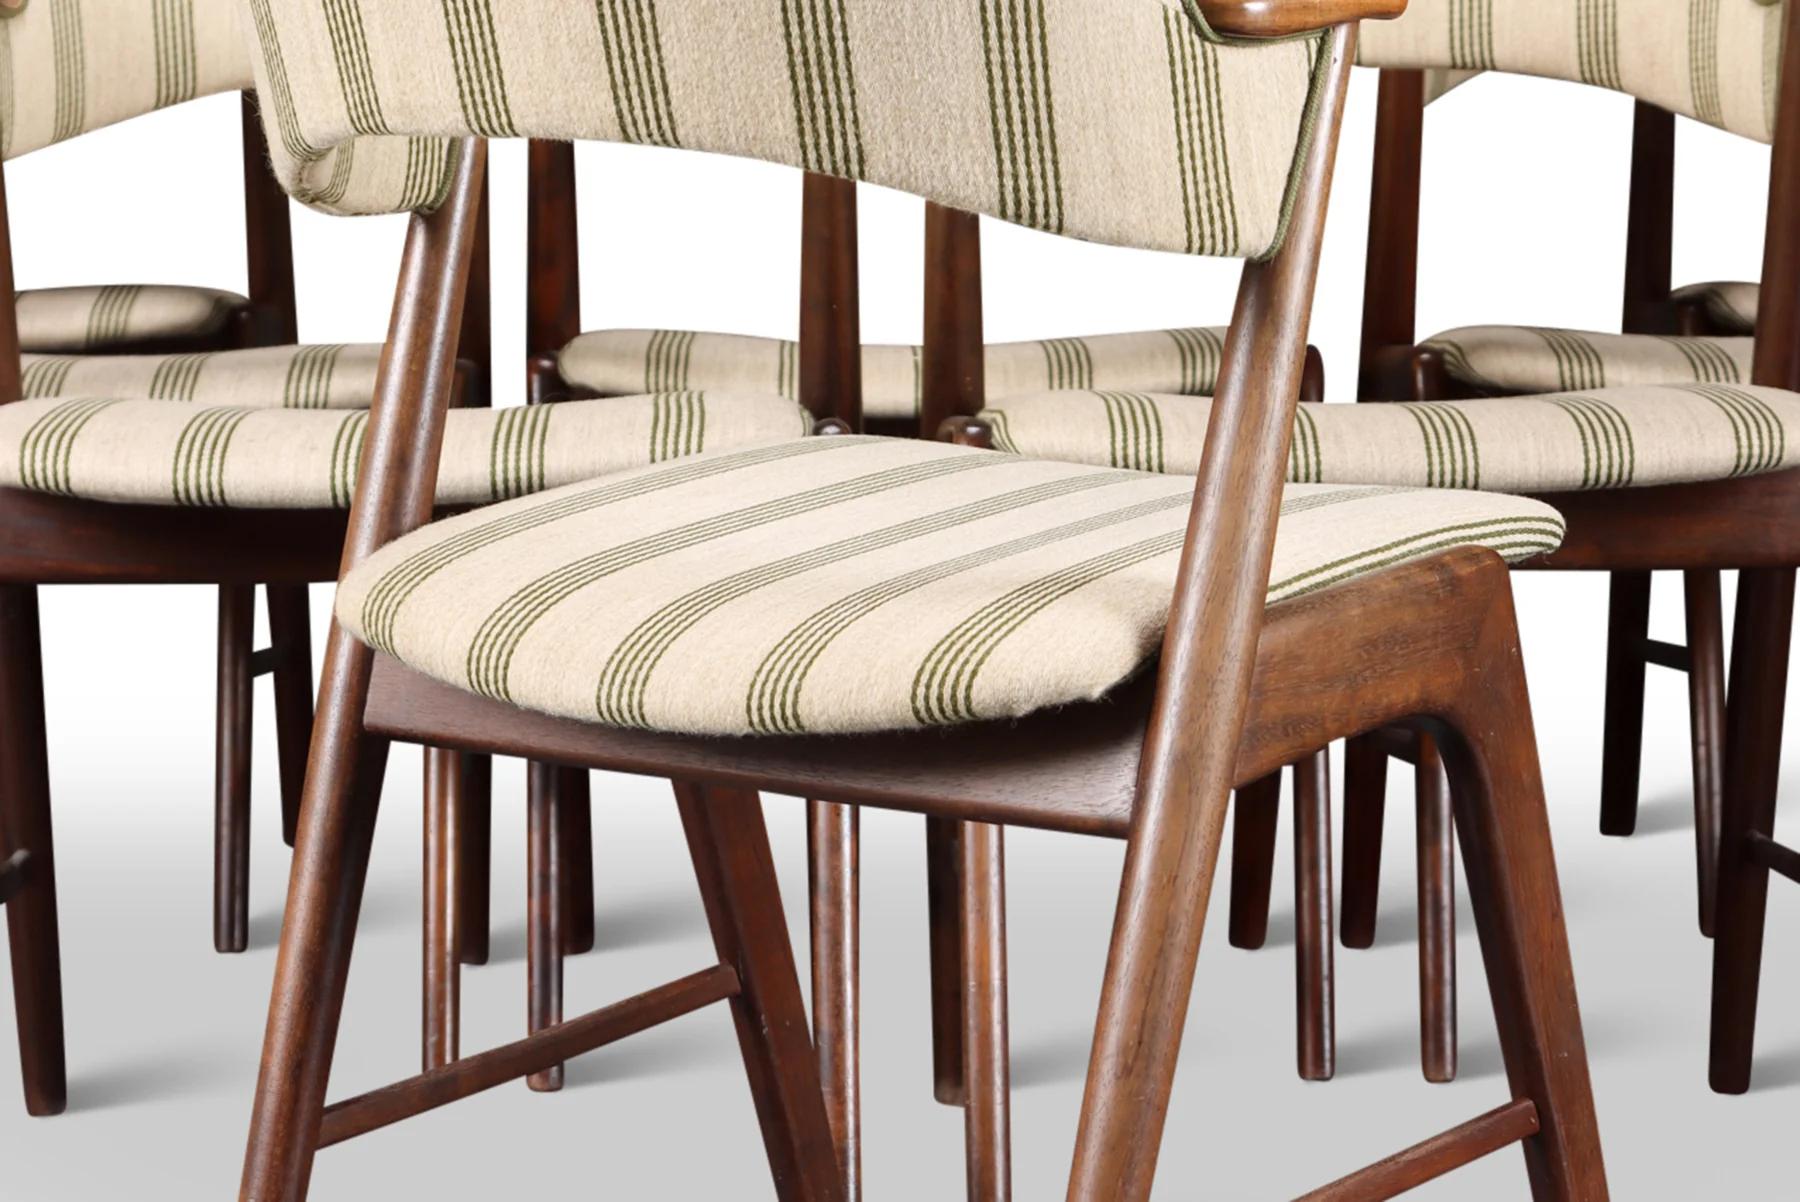 Origin: Denmark
Designer: Kai Kristiansen
Manufacturer: Korup Stolefabrik
Era: 1960s
Materials: Rosewood, Wool
Measurements: 21.5″ wide x 19″ deep x 29.5″ tall
Seat: 18